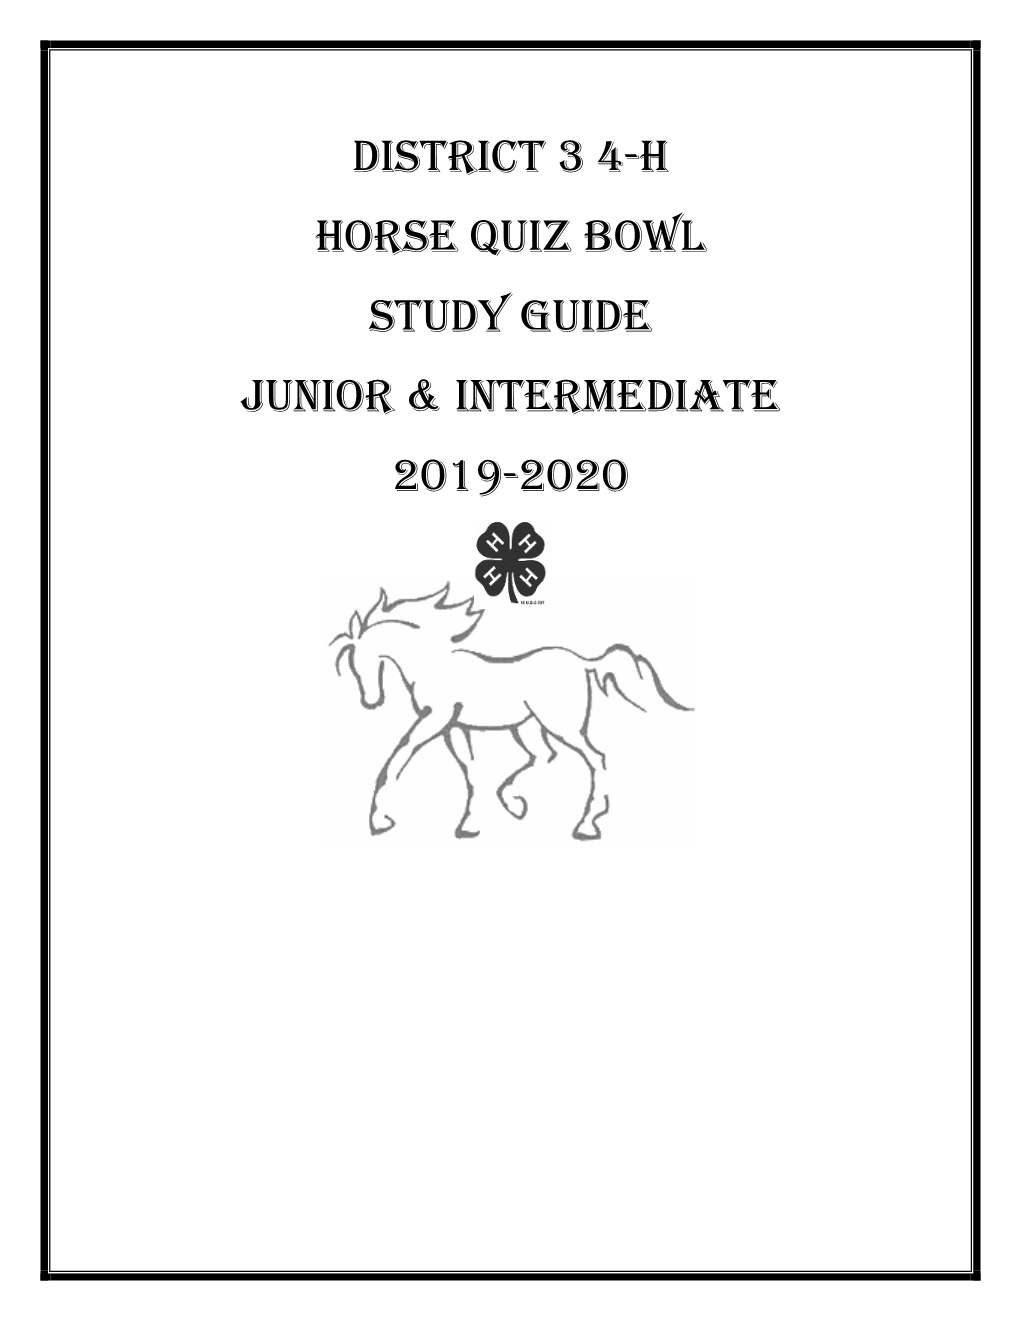 Horse Quiz Bowl Study Guide Junior & Intermediate 2019-2020